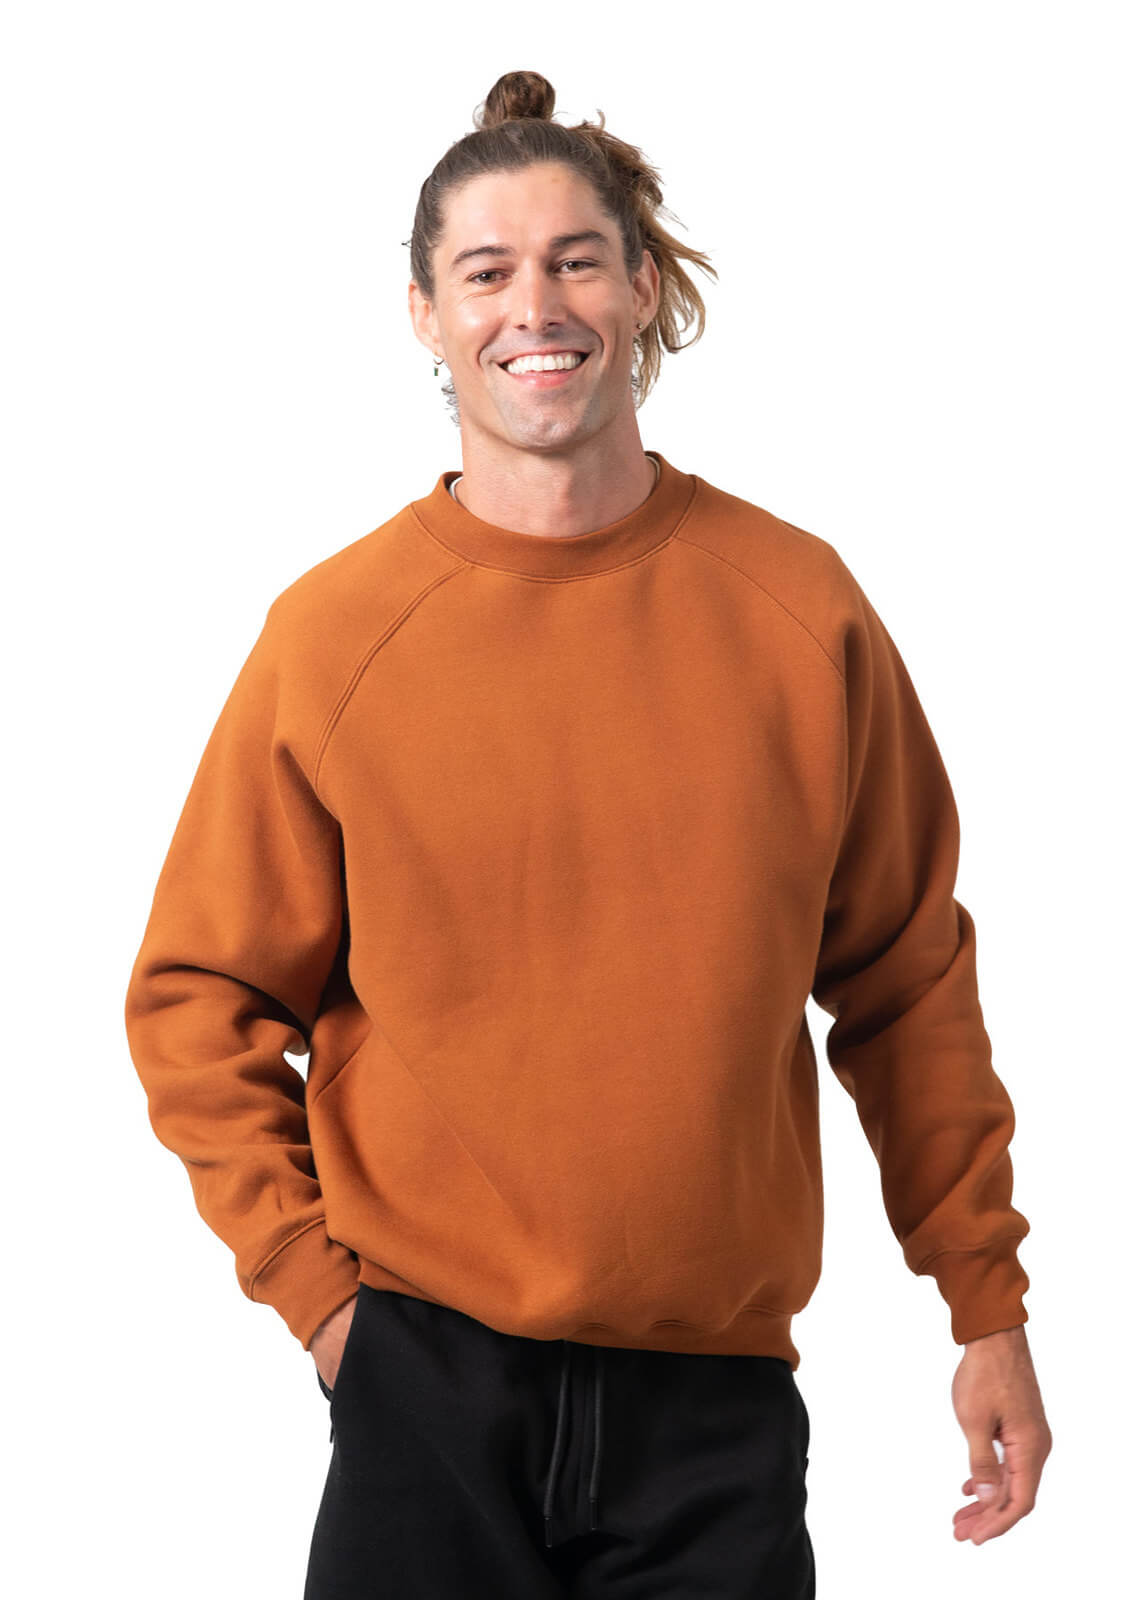 F367CW Ramo Adult's Cotton Care Sweatshirt